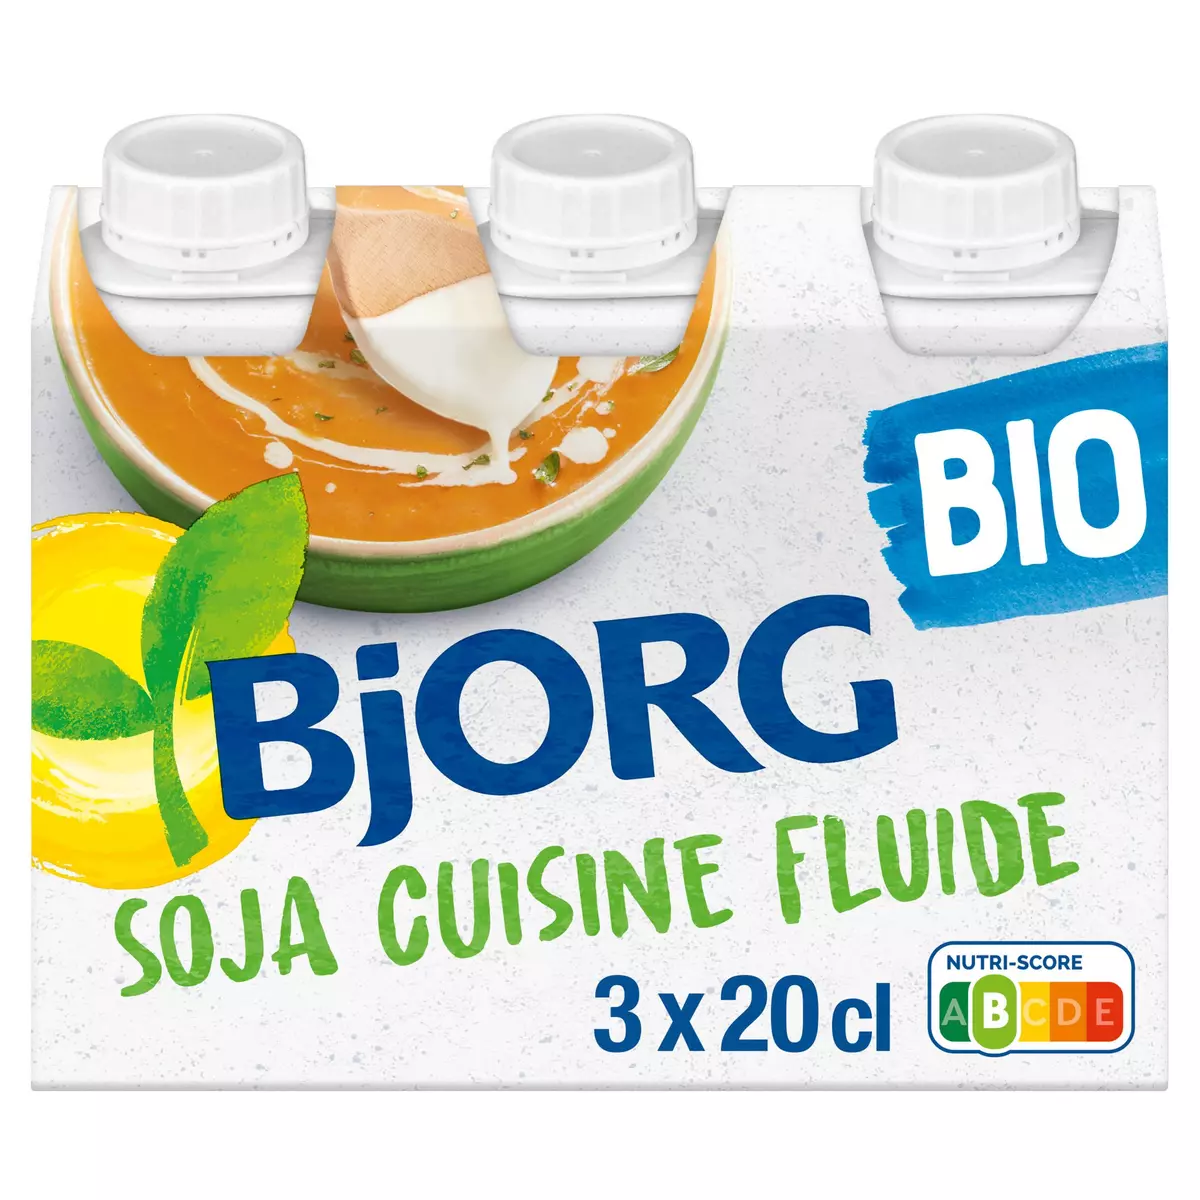 BJORG Soja cuisine fluide bio 3x20cl